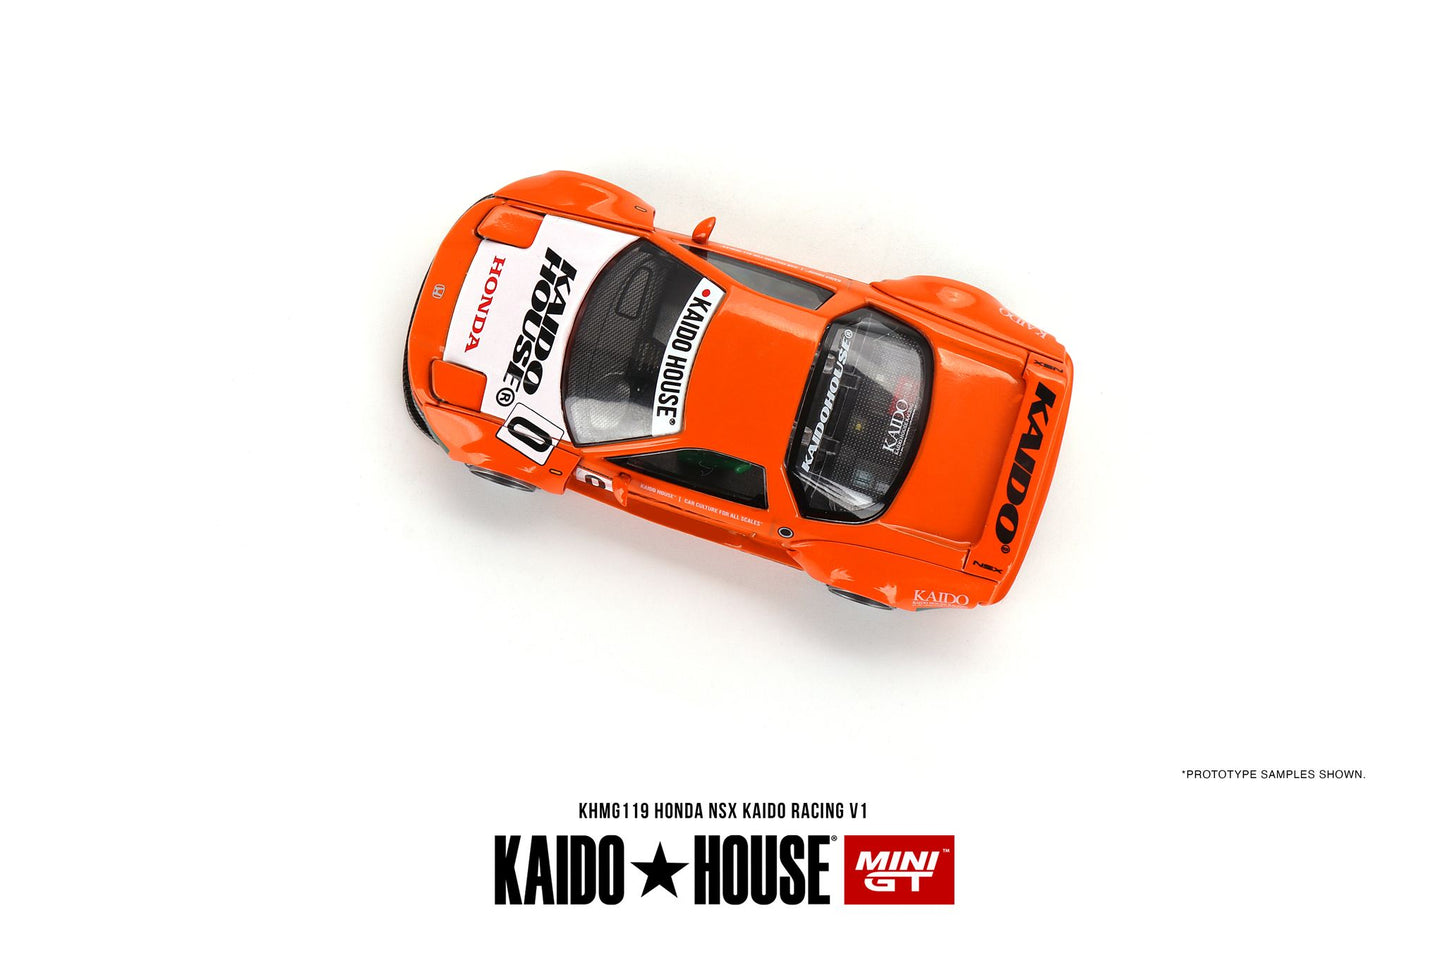 Mini GT x Kaido House Honda NSX Kaido Racing V1